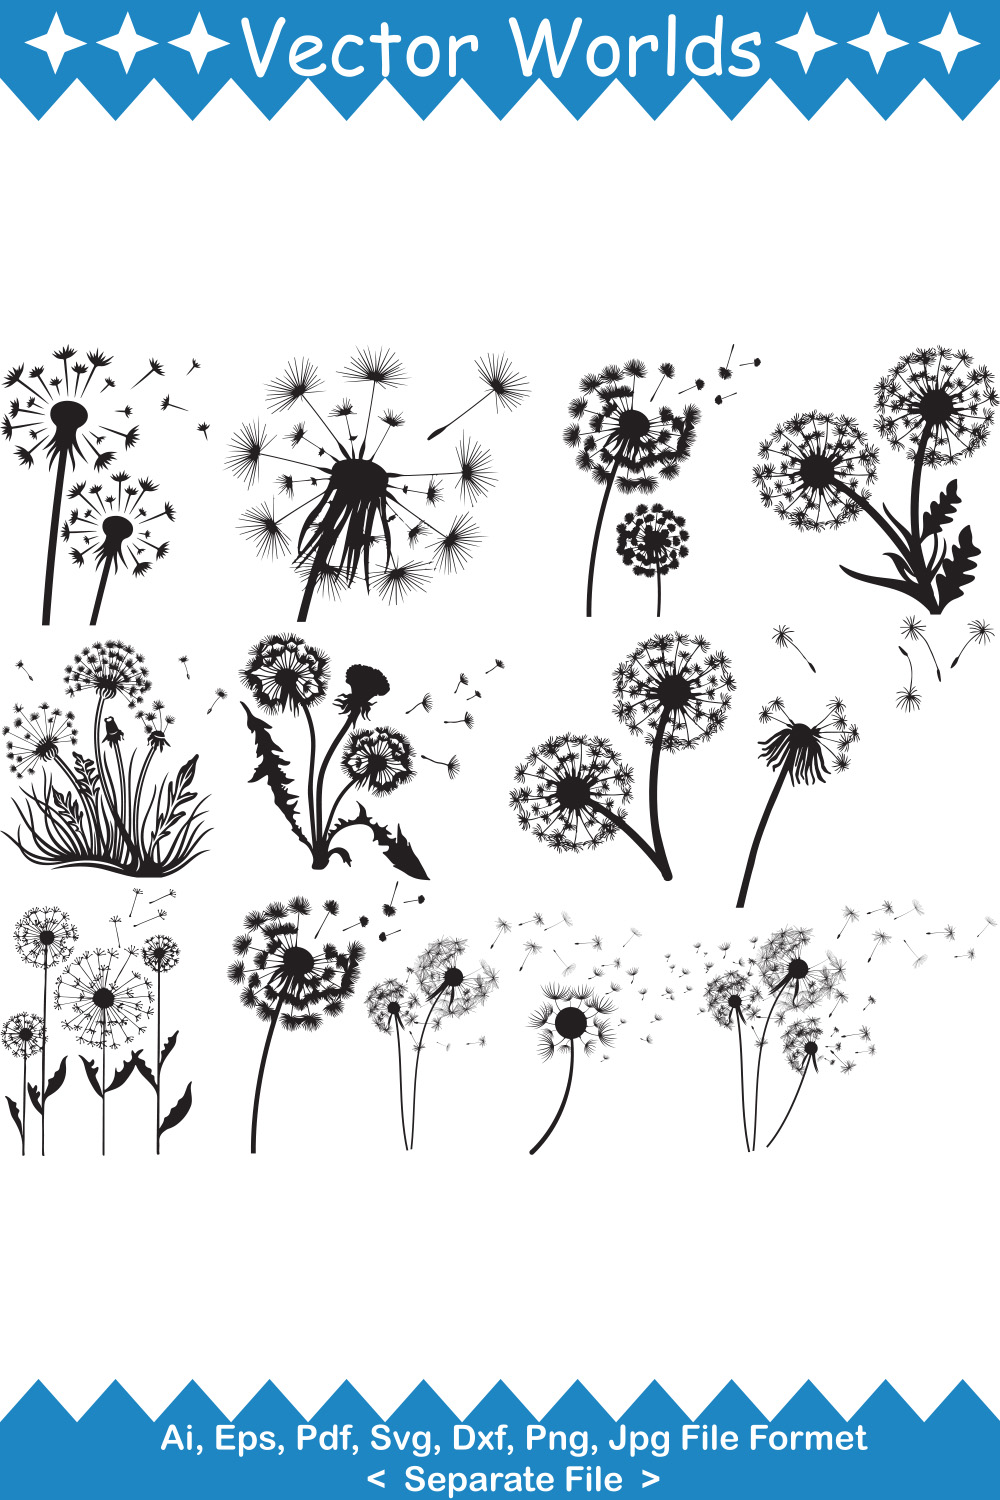 A selection of unique images of dandelion silhouettes